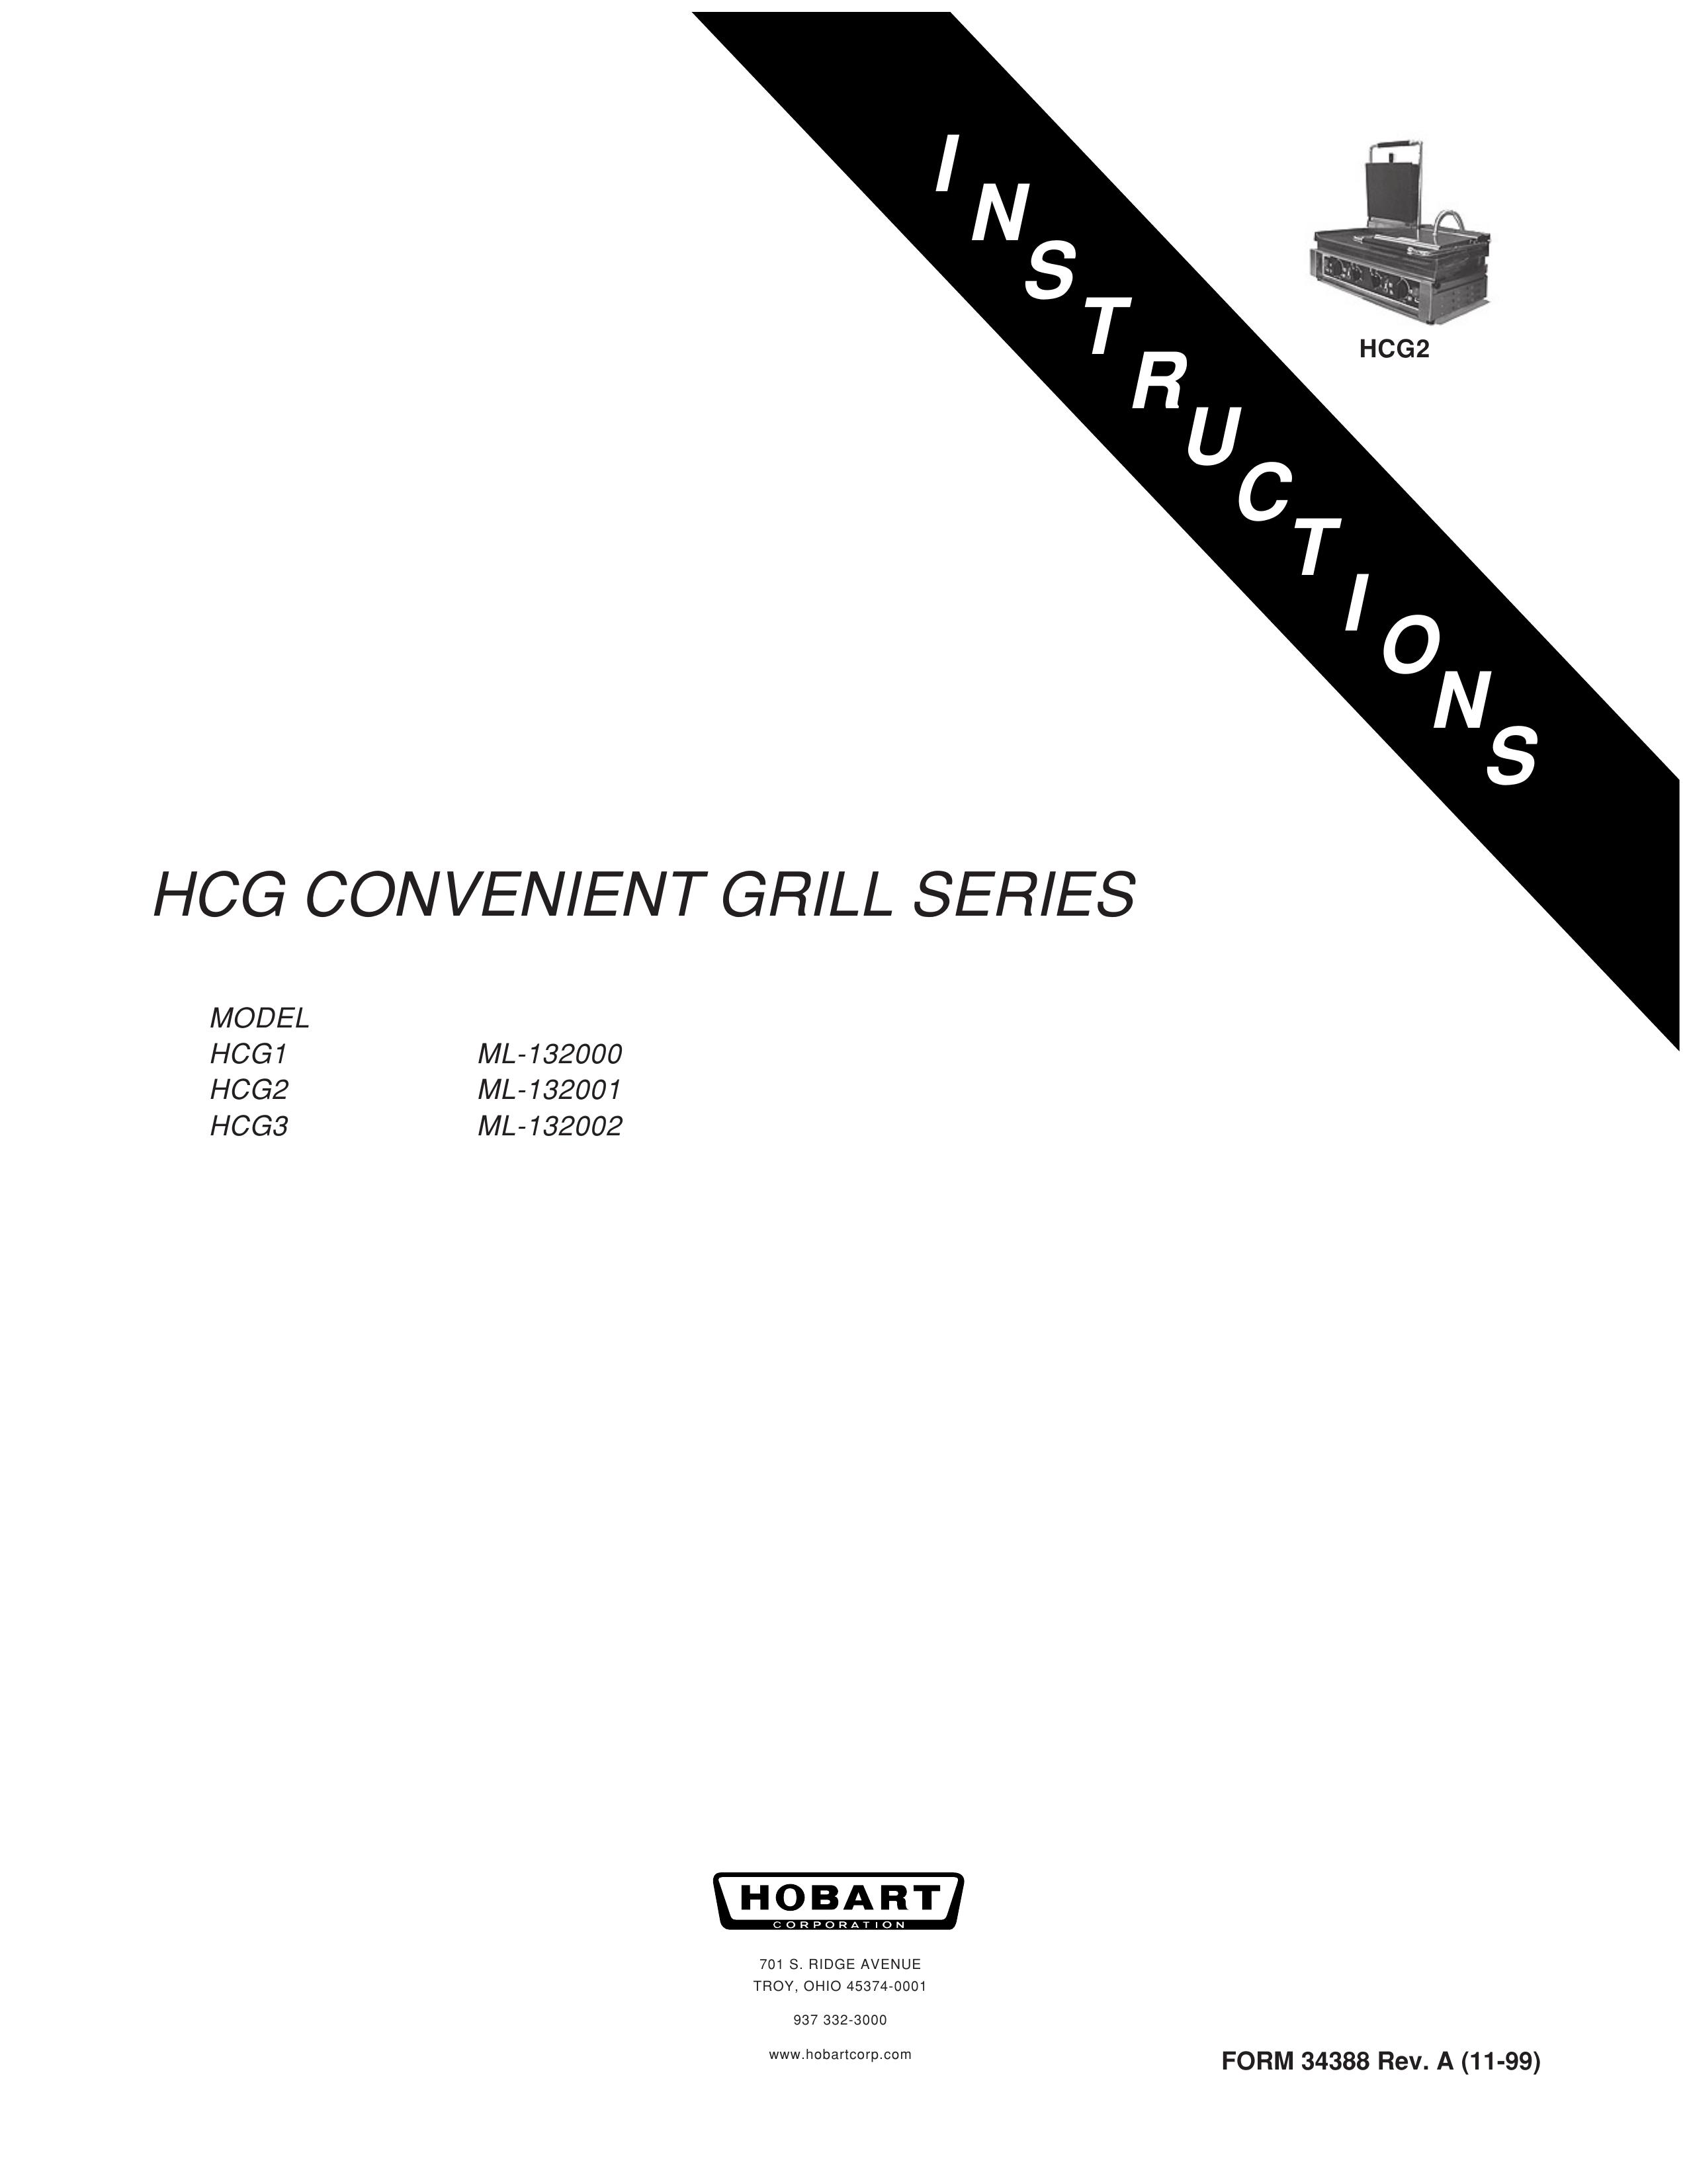 Hobart HCG2 ML-132001 Charcoal Grill User Manual